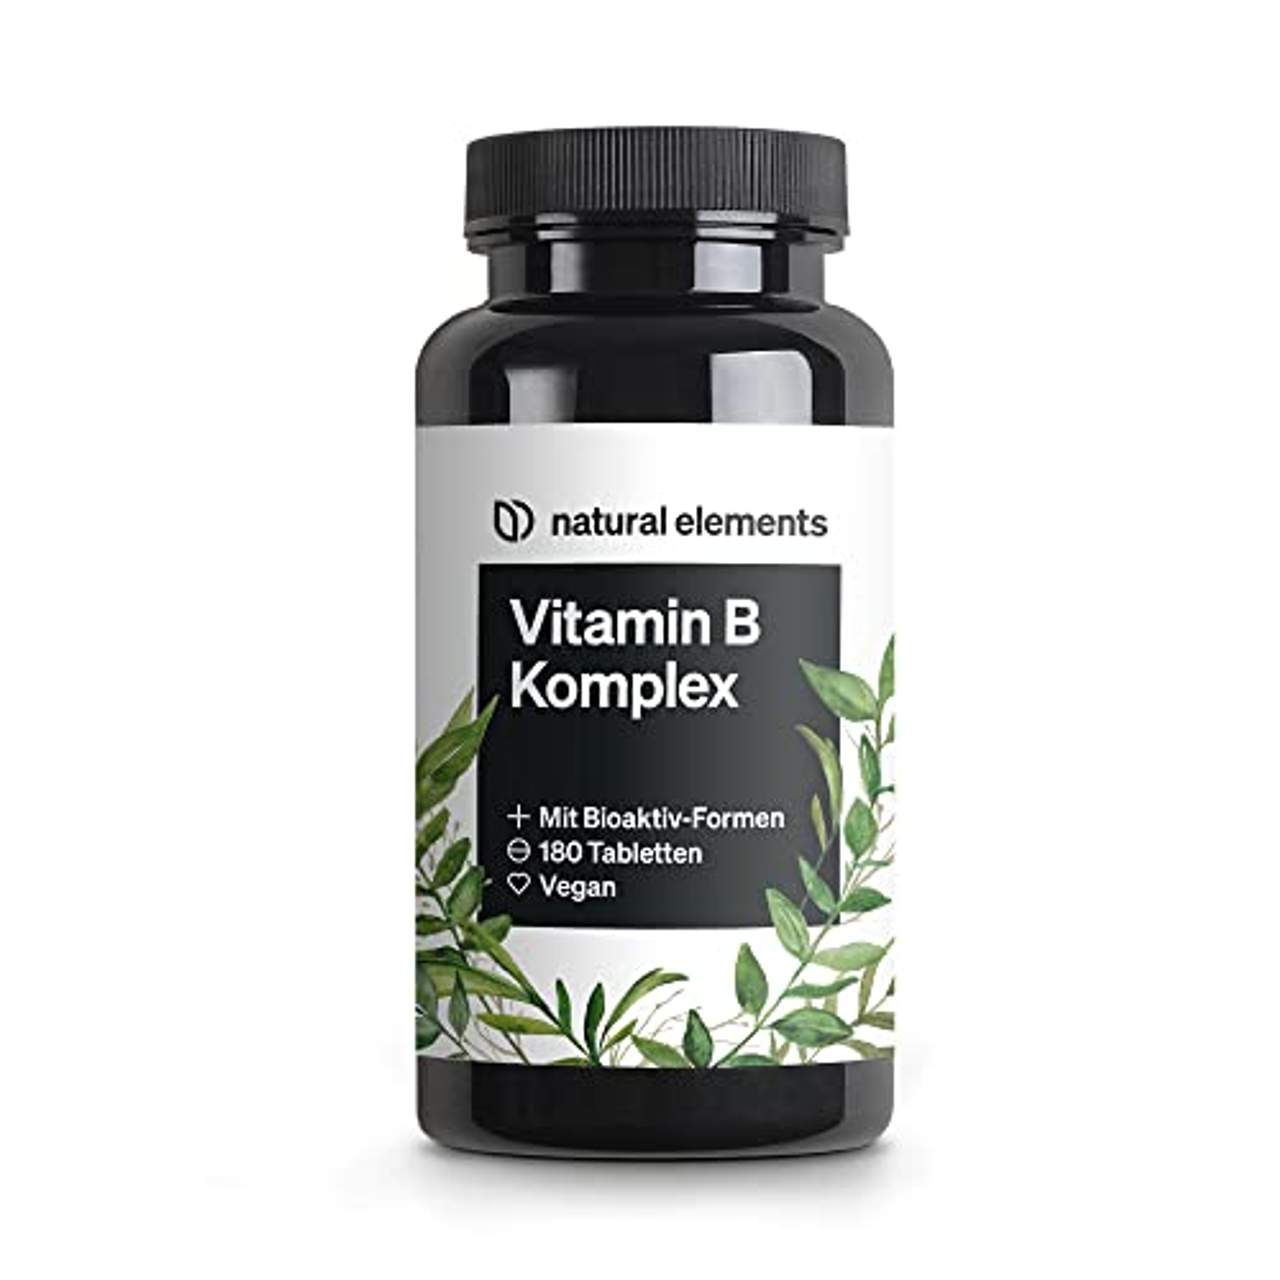 natural elements Vitamin B Komplex